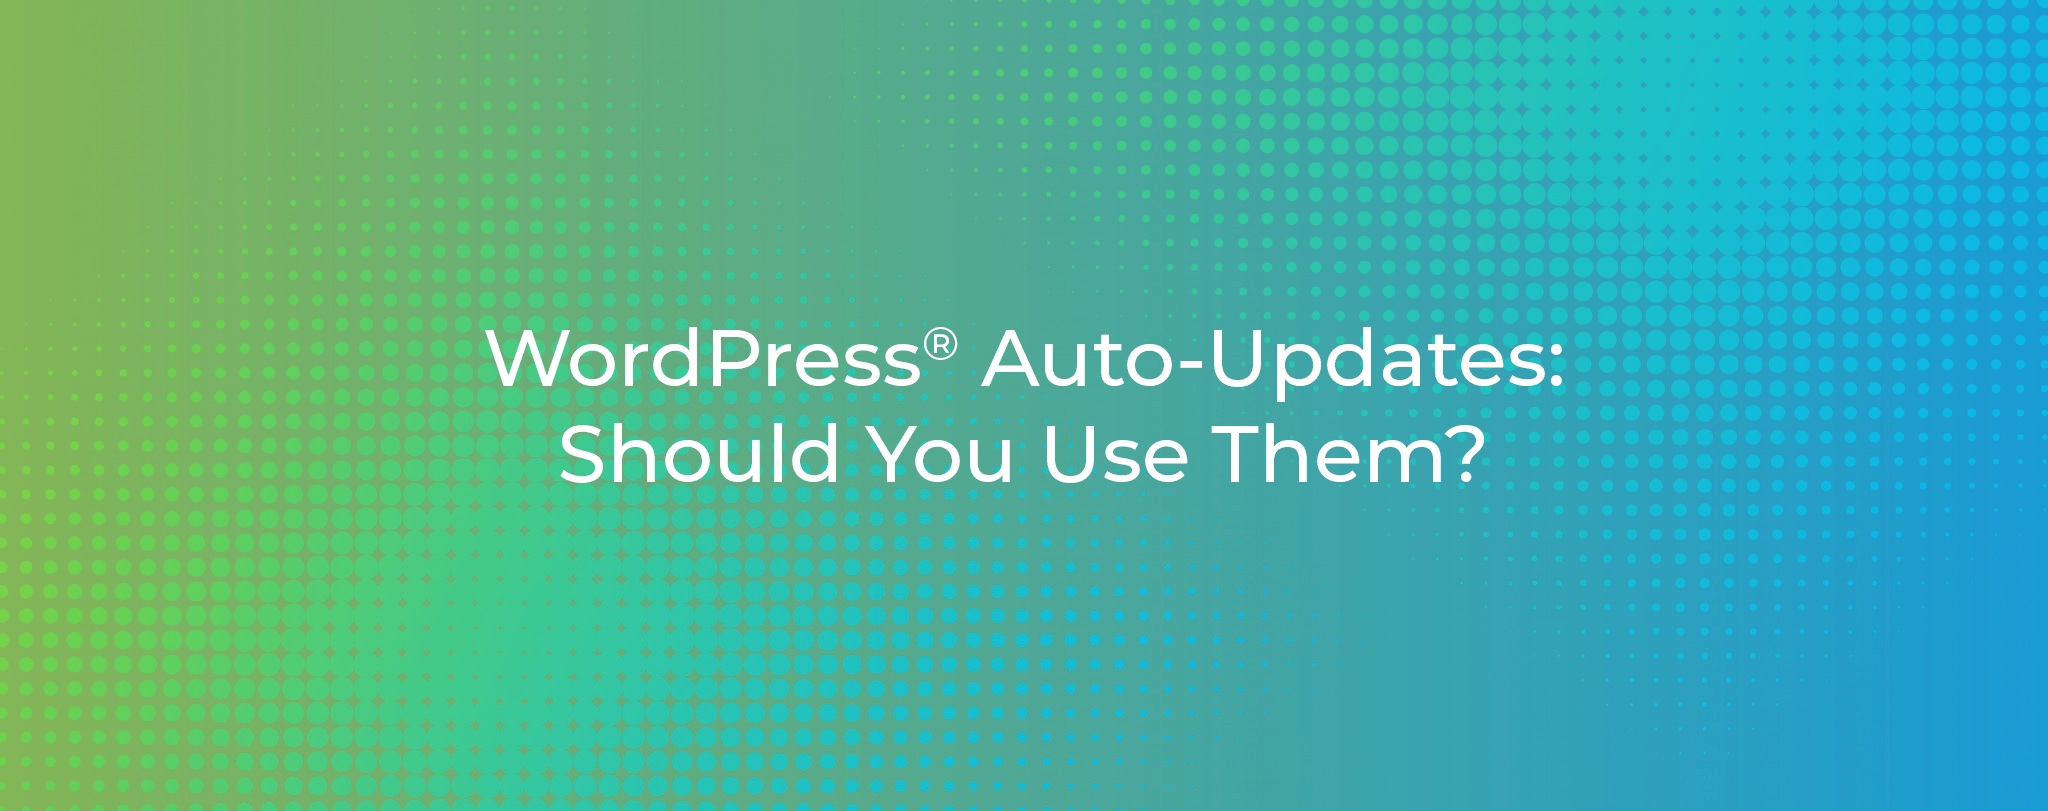 WordPress Auto Updates Should You Use Them